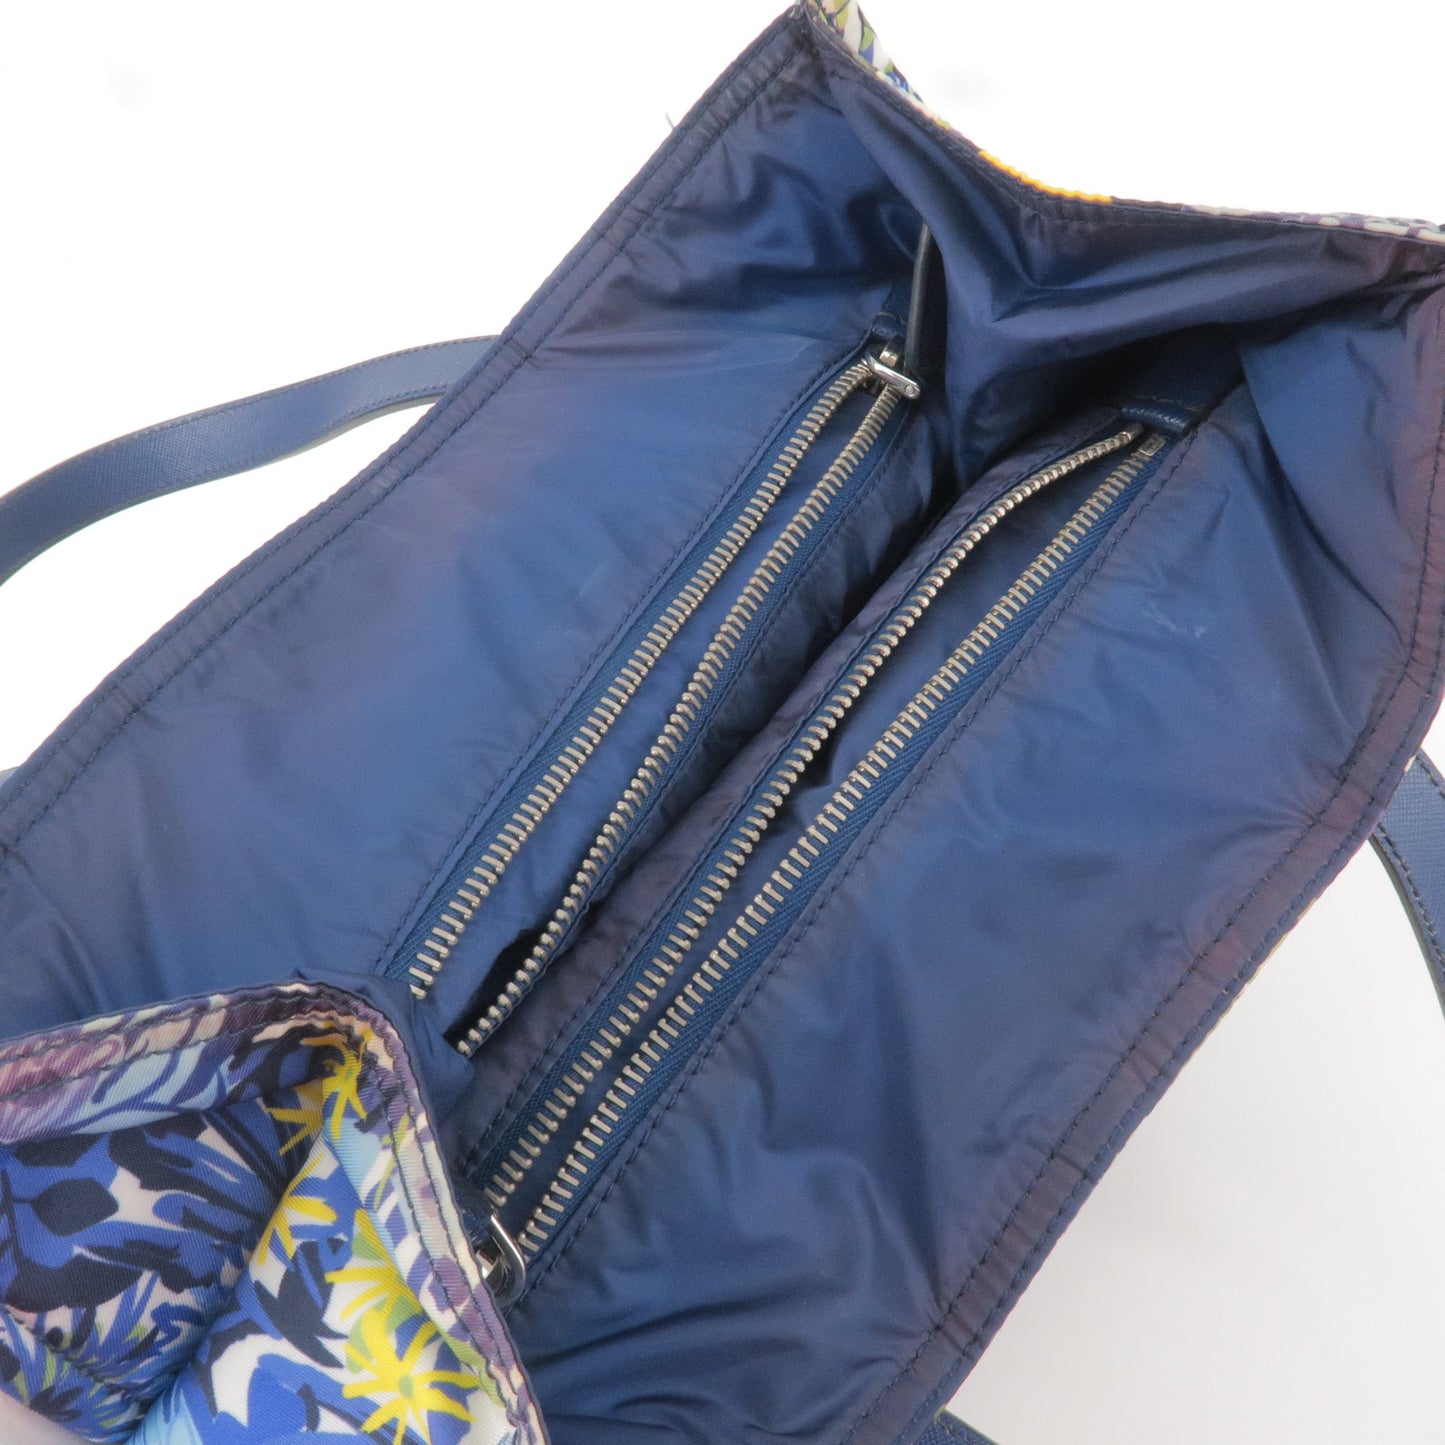 PRADA Logo Nylon Leather Tote Bag Floral Print Blue BN2851